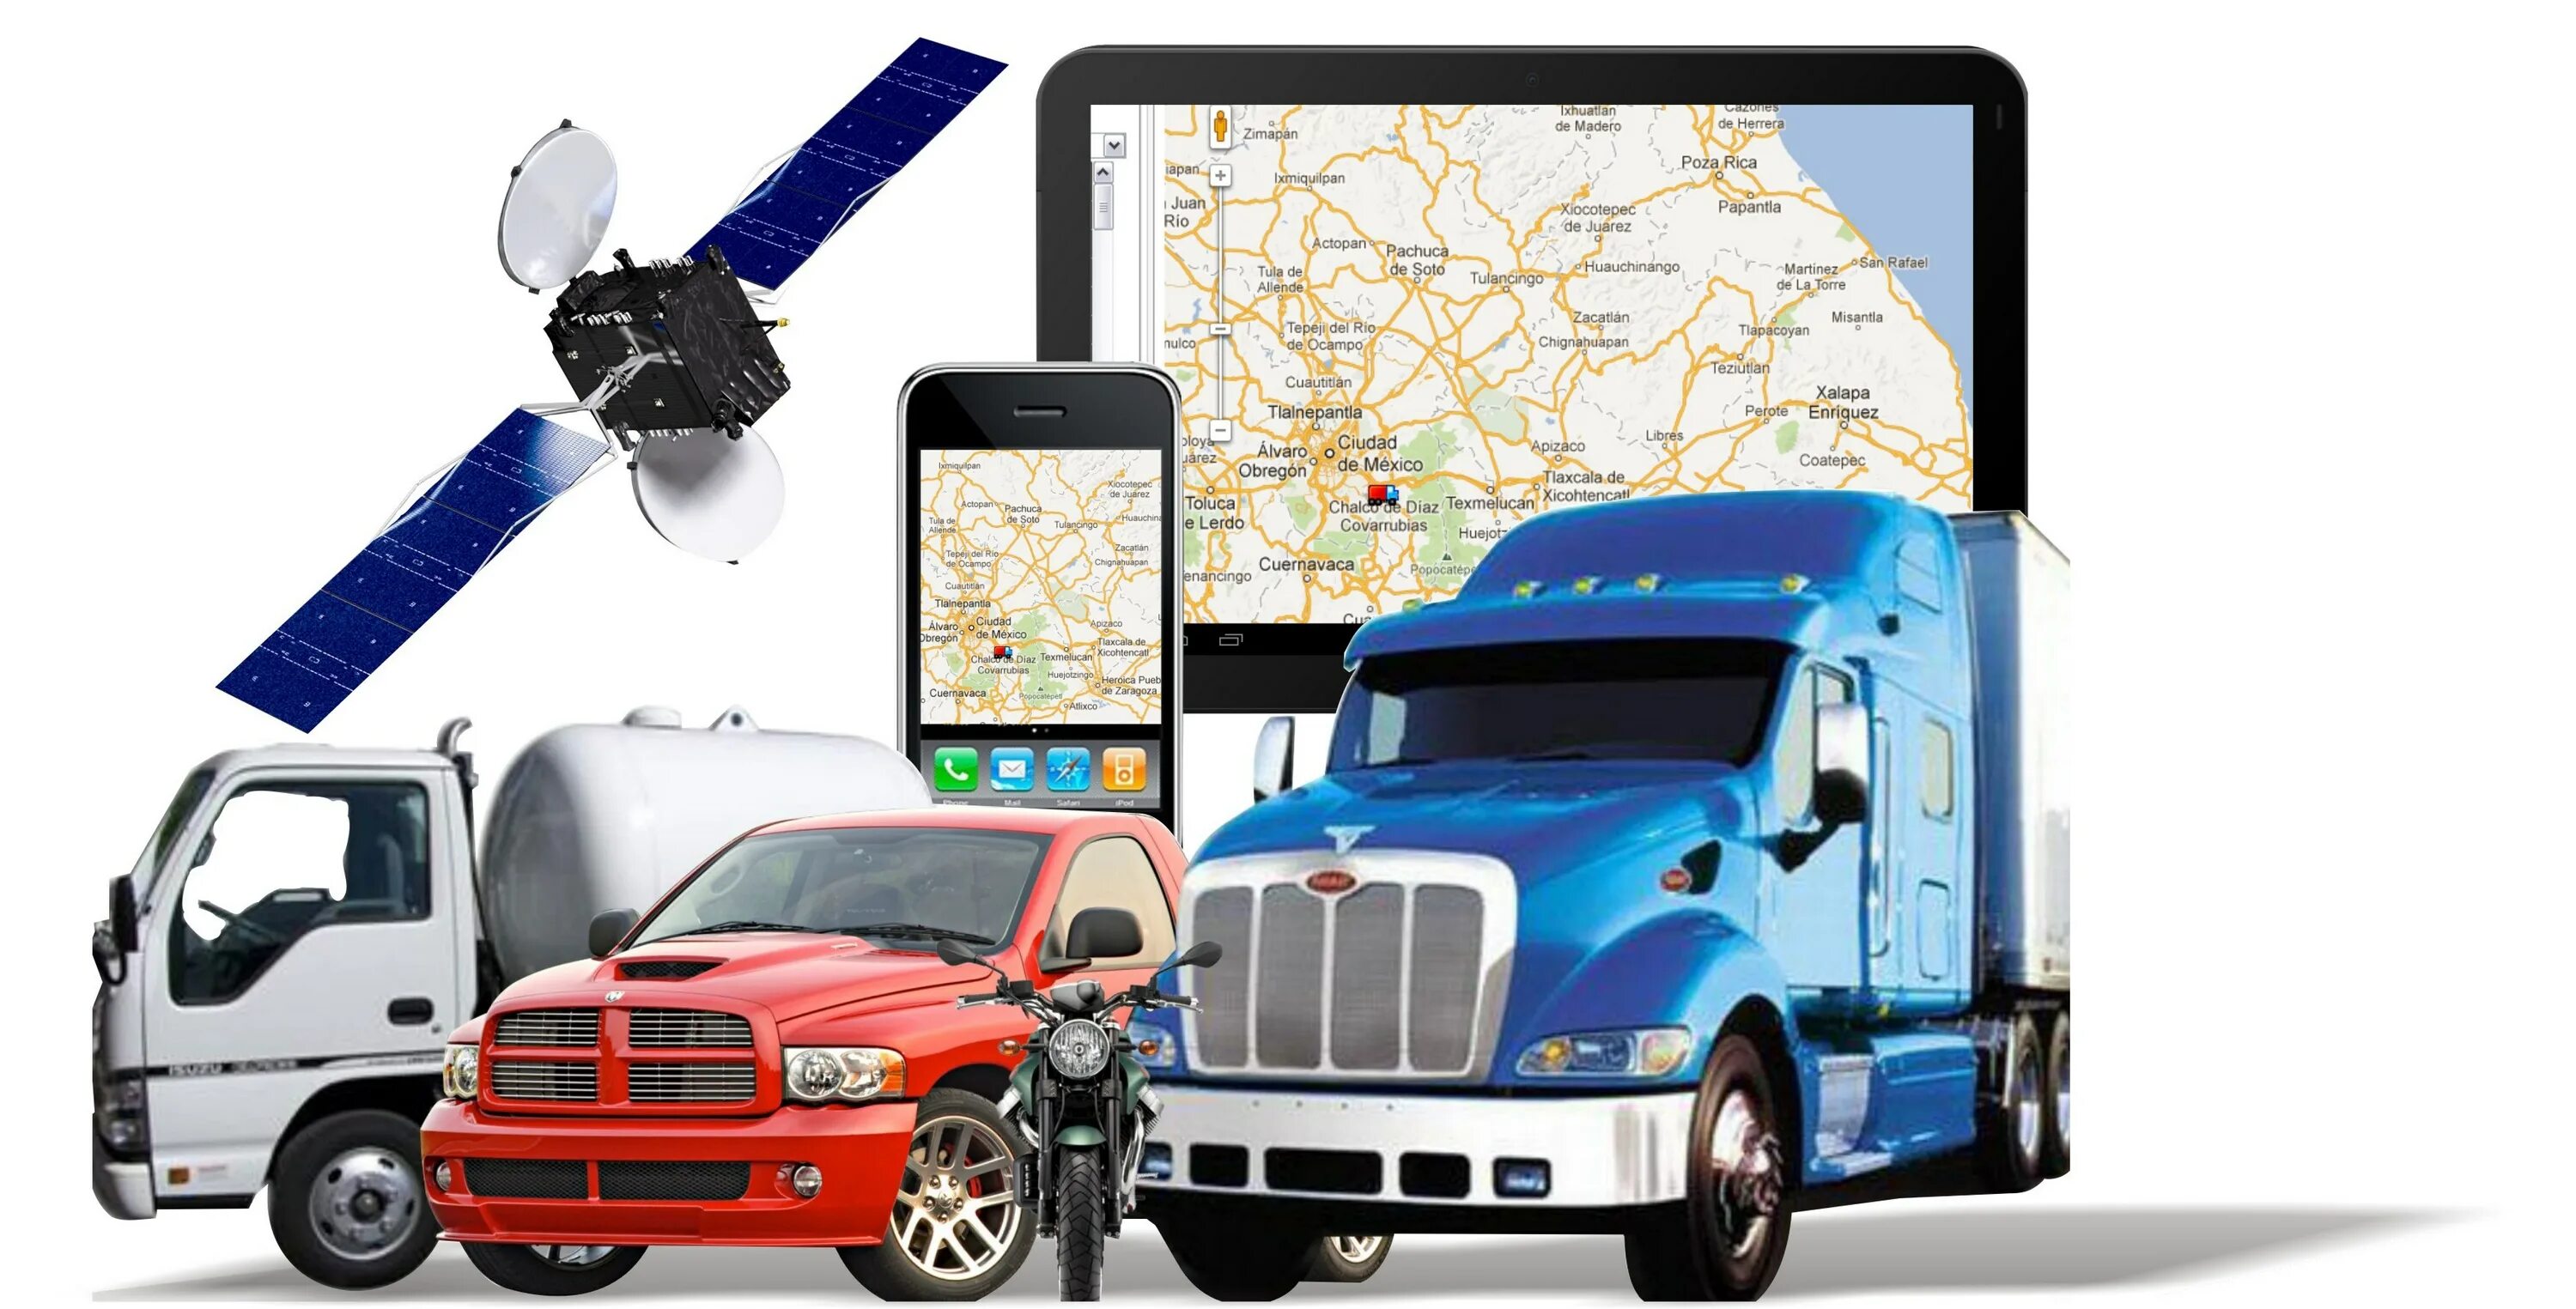 Средство контроля транспорта. GPS ГЛОНАСС мониторинг. Подсистема GPS/ ГЛОНАСС мониторинга. Система GPS контроля транспорта. Спутниковый мониторинг транспорта ГЛОНАСС.